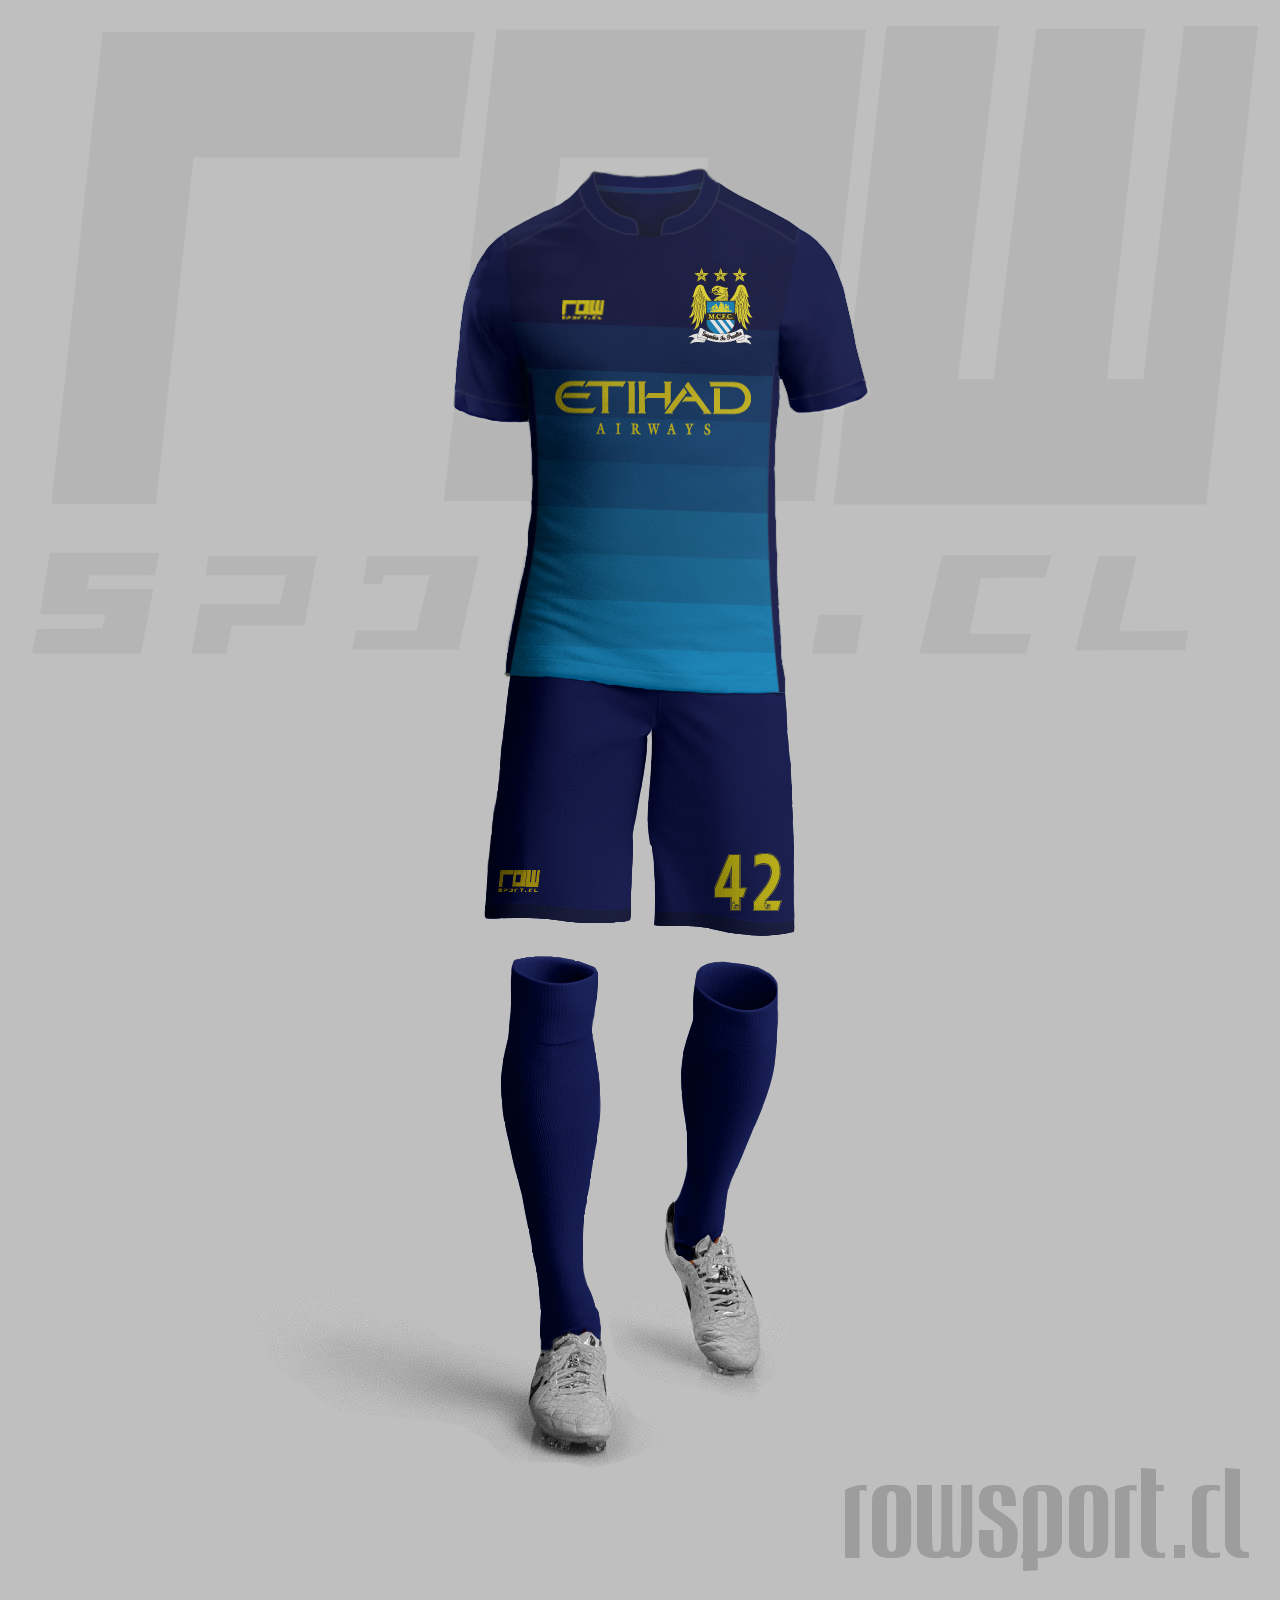 Twitter Rowsport："Diseño y Confeccion de equipos de futbol Modelo City 14B http://t.co/eImANvQ9TL" Twitter